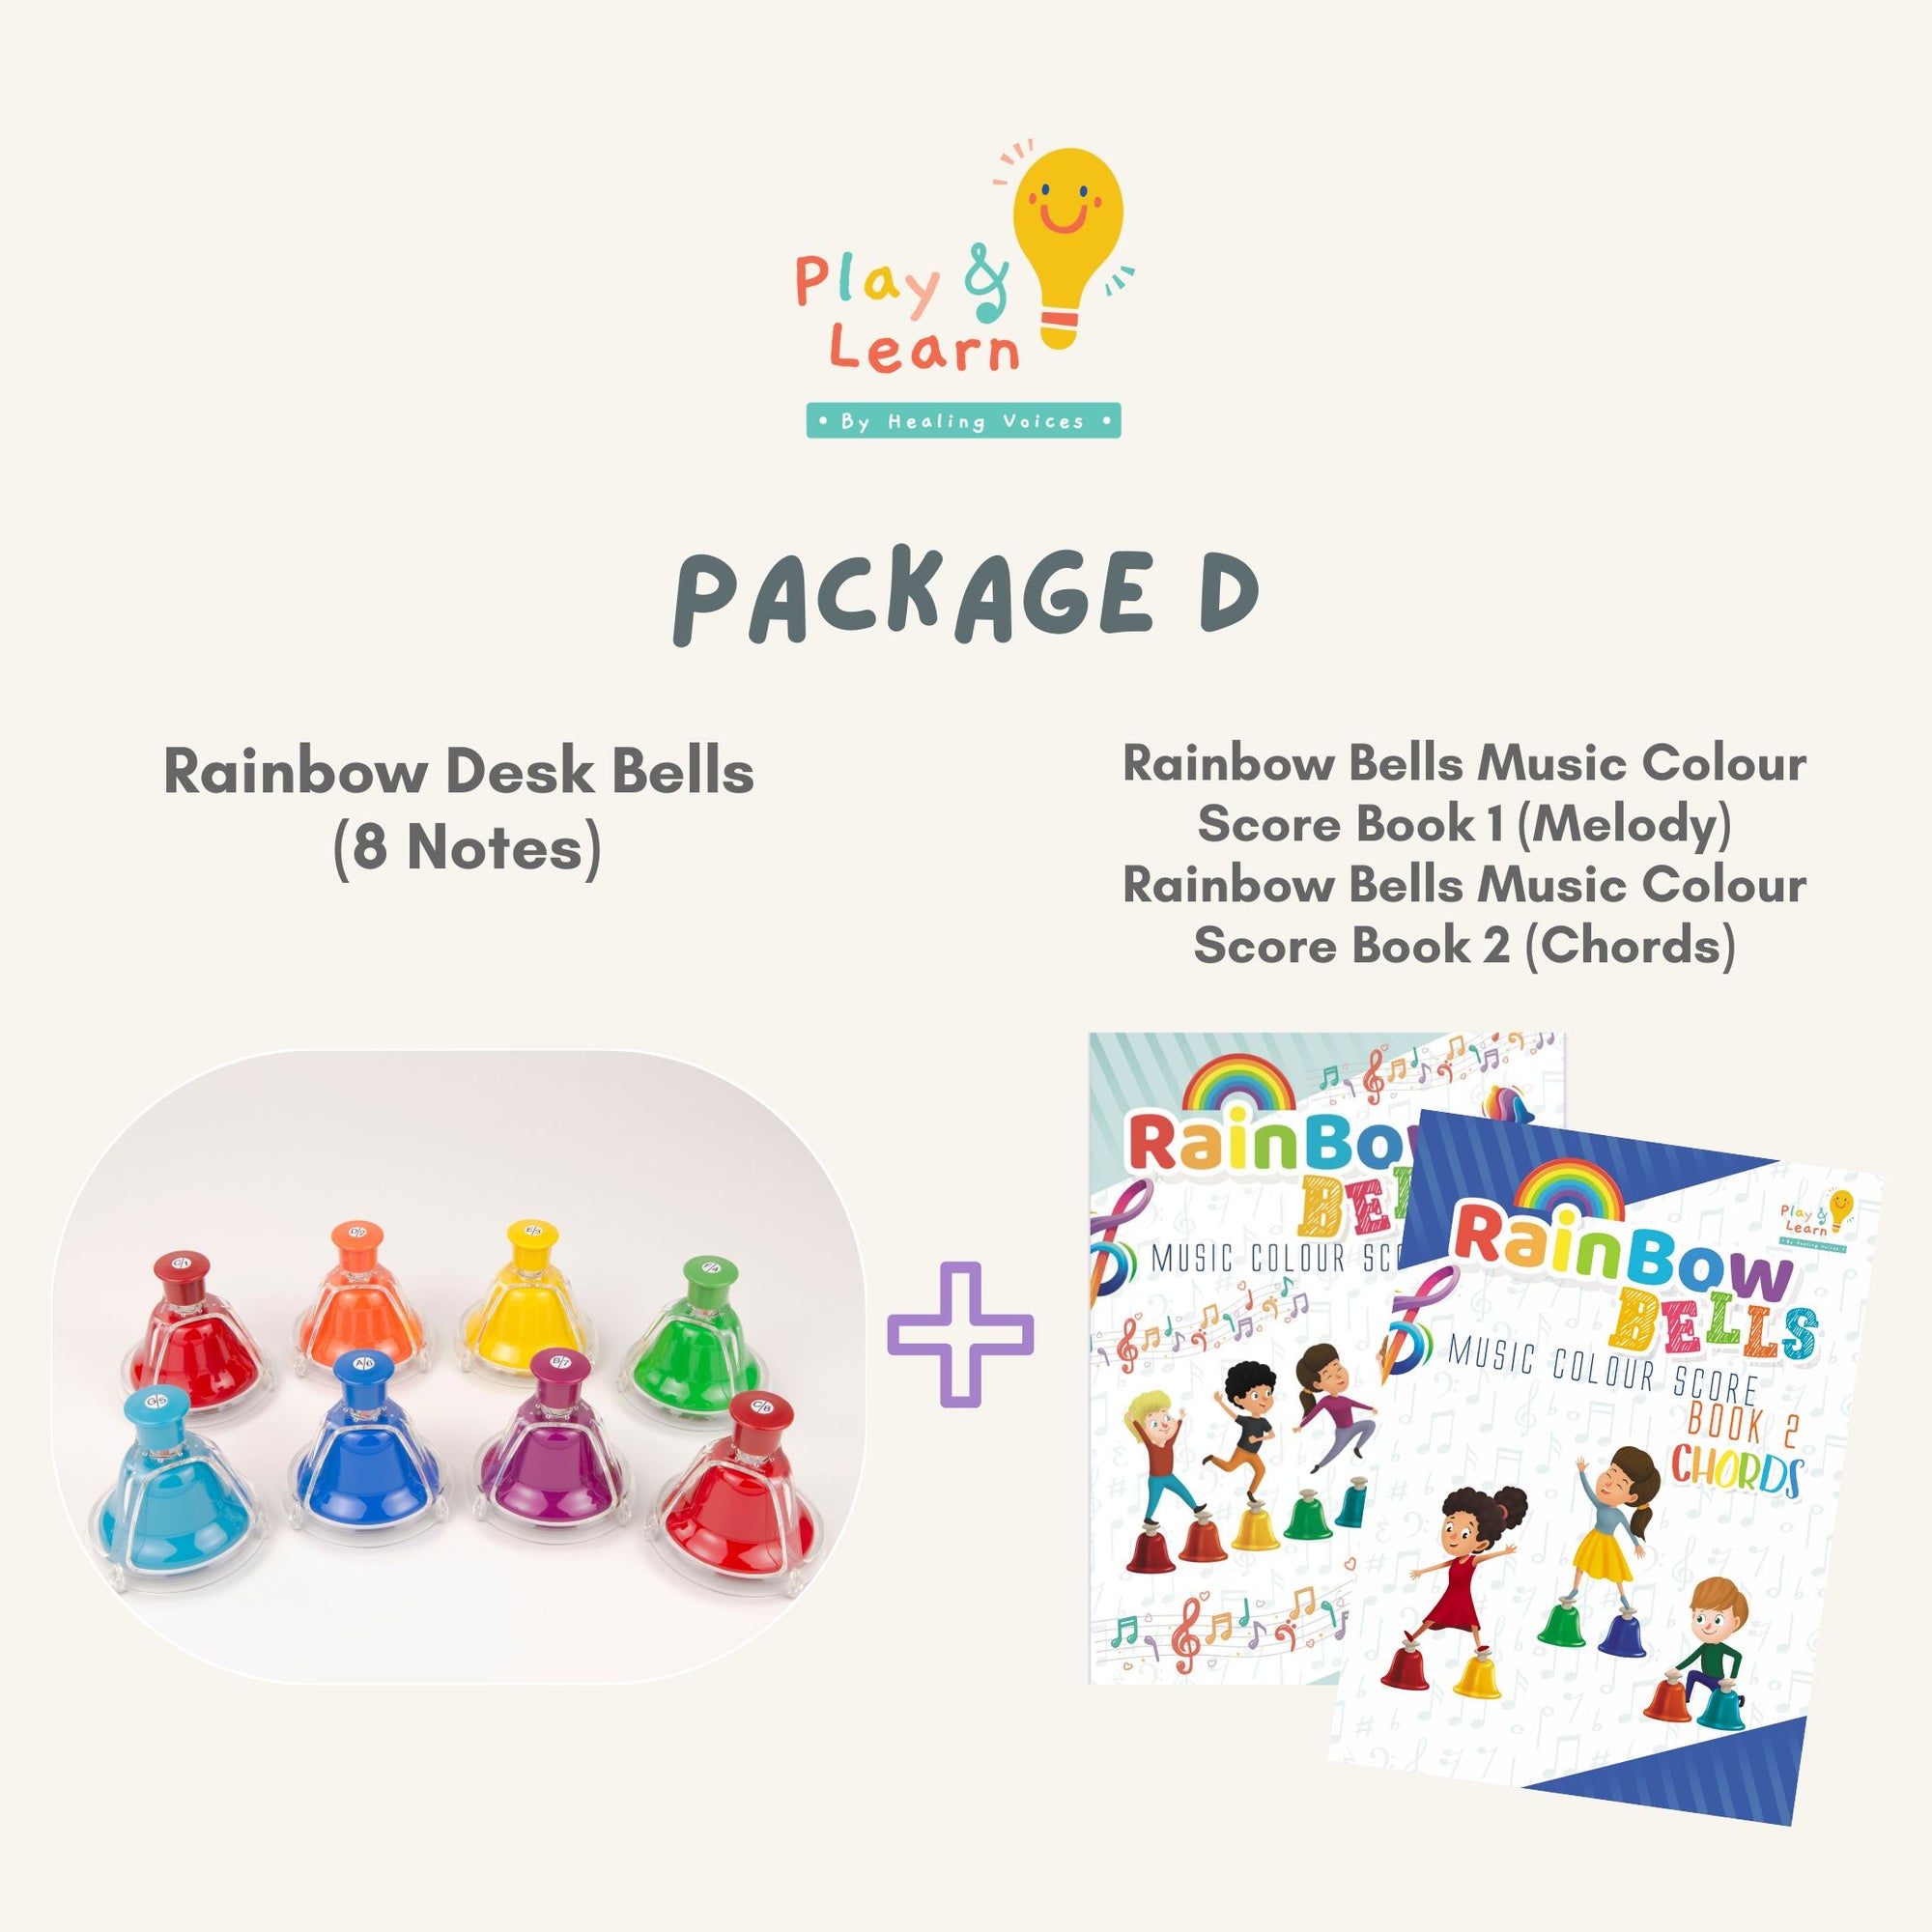 Package D: Rainbow Desk Bells(8 notes) + Rainbow Music Score (Book 1,2)